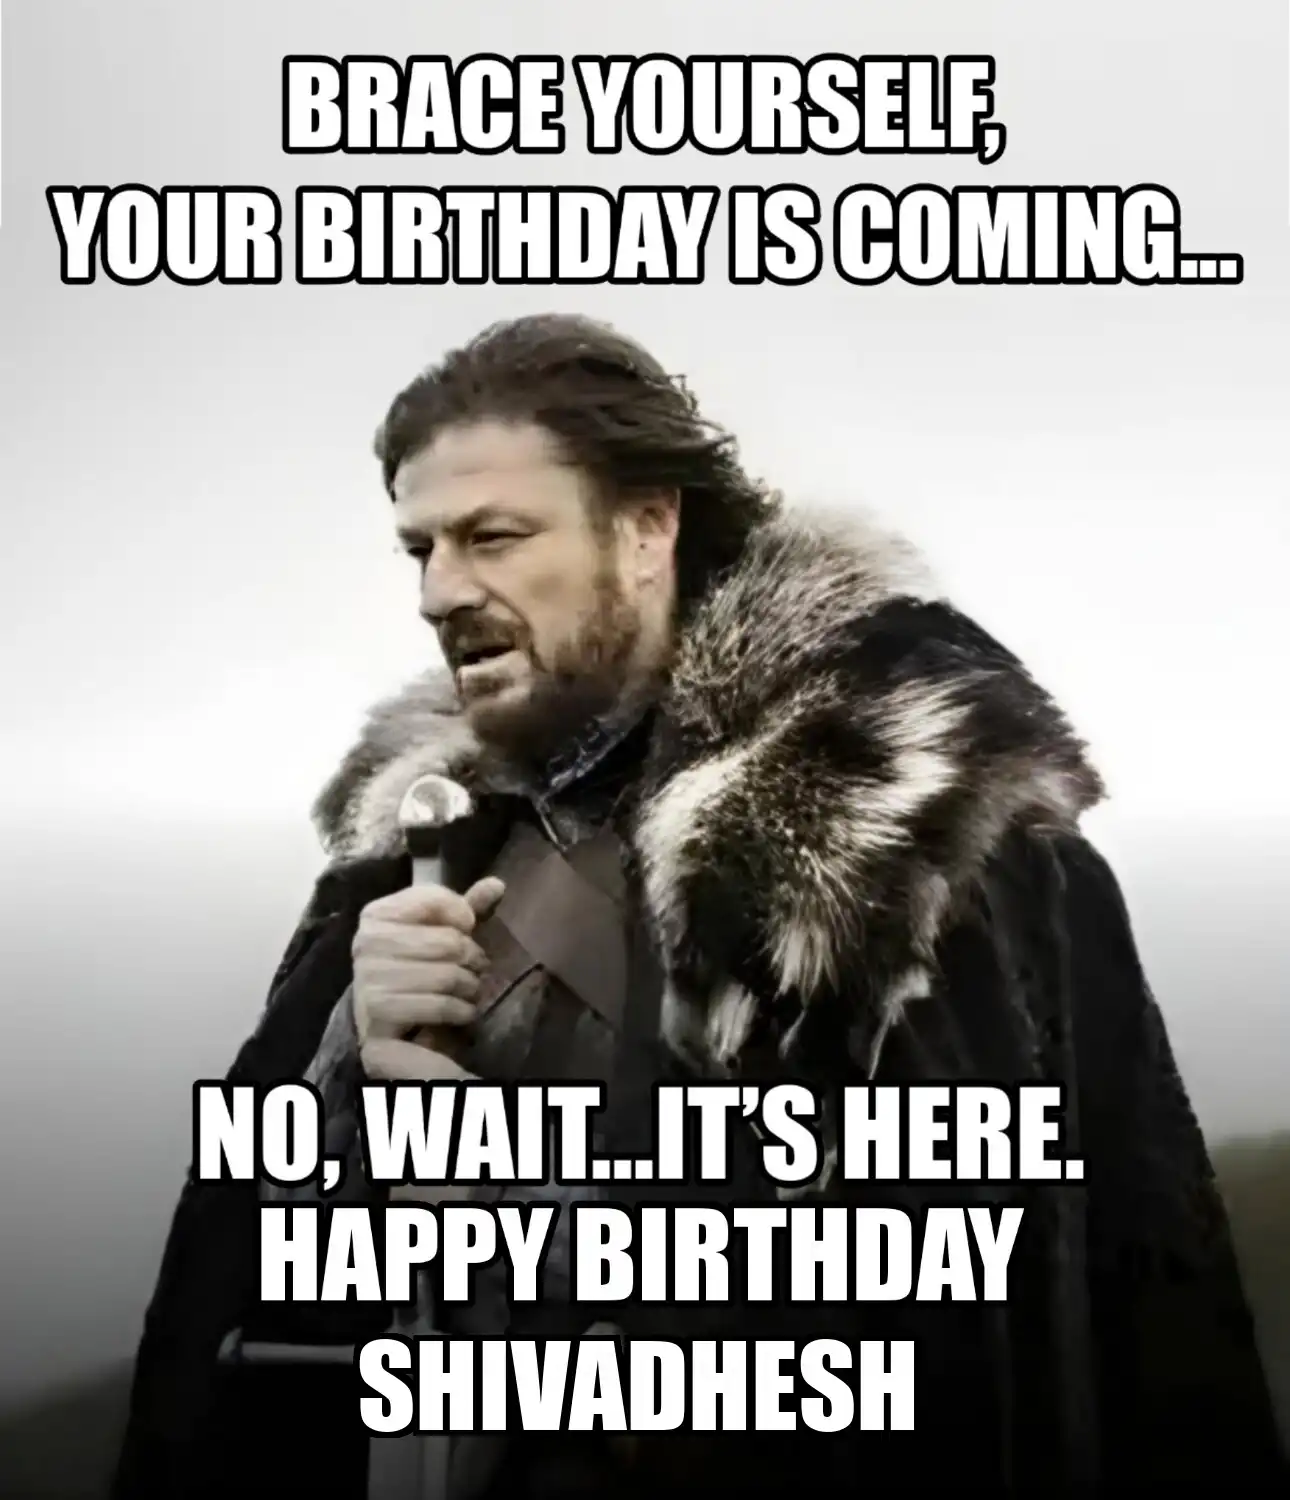 Happy Birthday Shivadhesh Brace Yourself Your Birthday Is Coming Meme